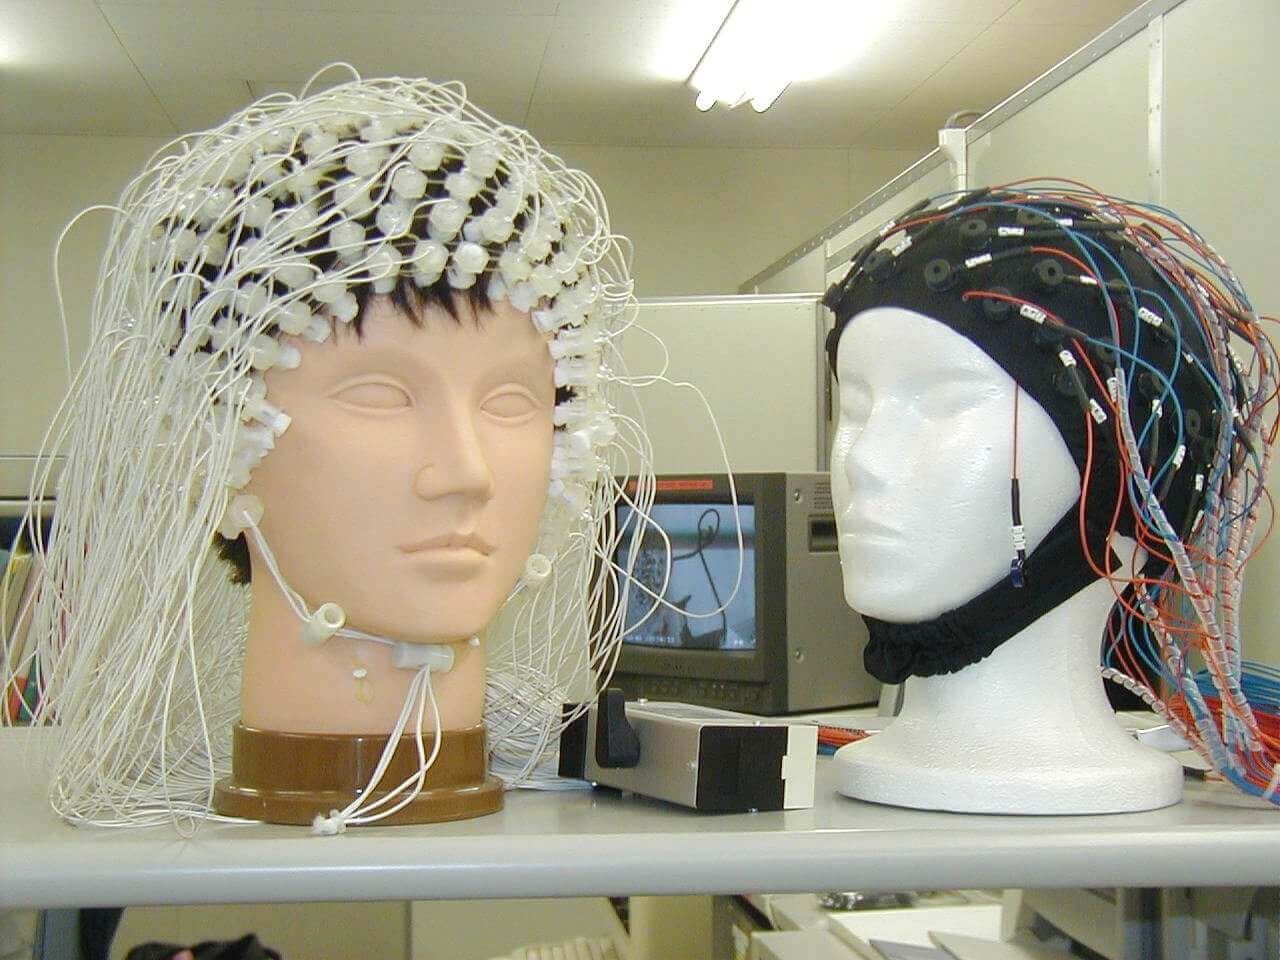 Ээг ярославль. ЭЭГ головного мозга электроды. Электродная шапочка для ЭЭГ. Шлем для ЭЭГ Нейрософт. Электроэнцефалография головного мозга (ЭЭГ).